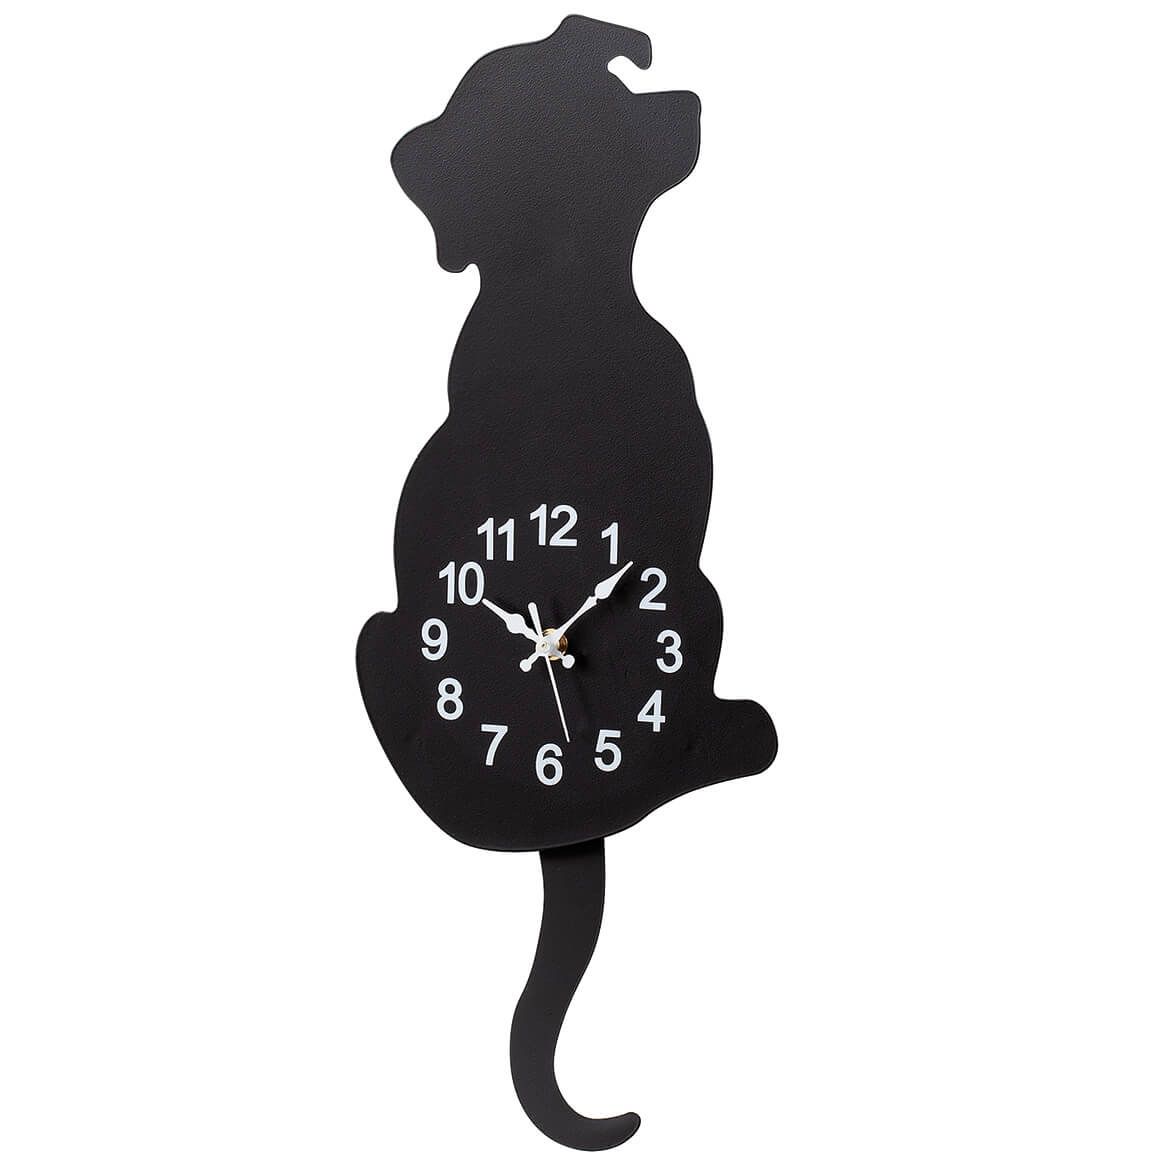 Dog Pendulum Wall Clock + '-' + 376958